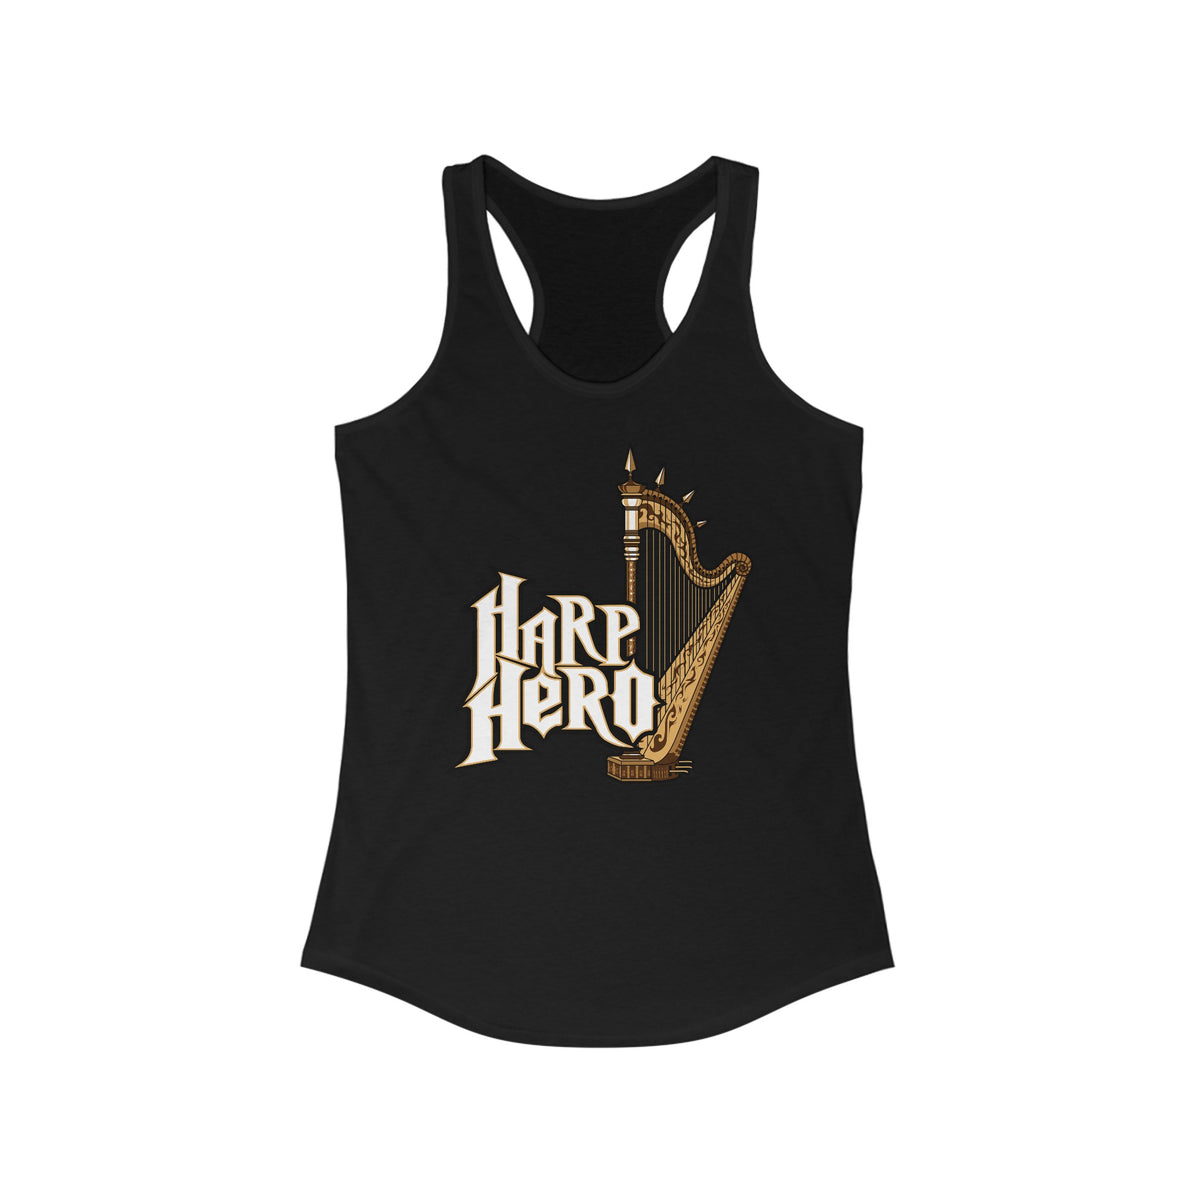 Harp Hero -  Women’s Racerback Tank